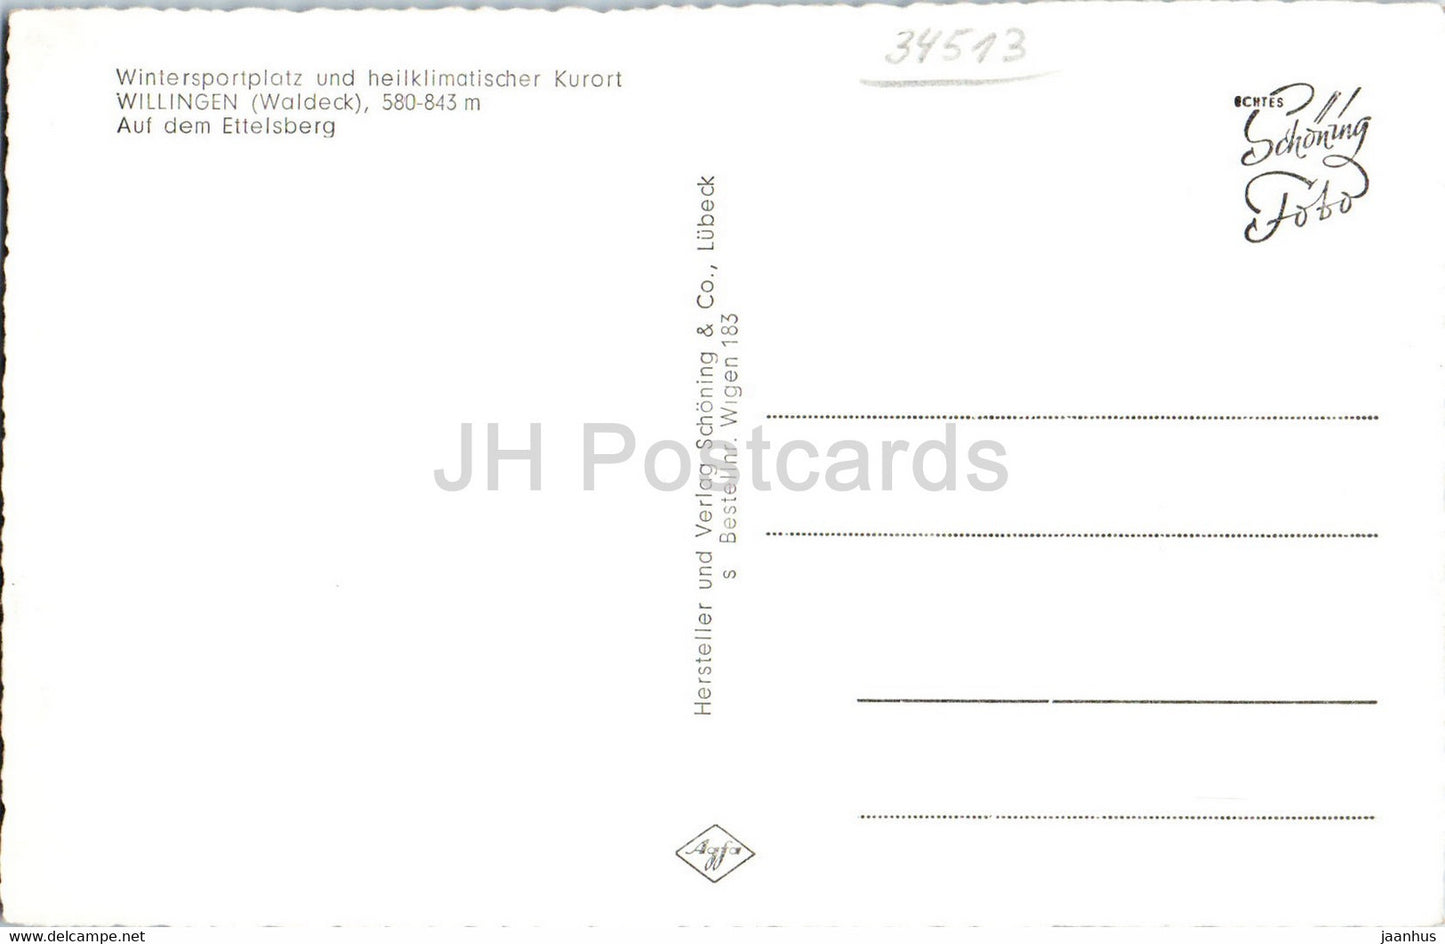 Willingen - Waldeck - Auf dem Ettelsberg - ski sport - old postcard - Germany - unused